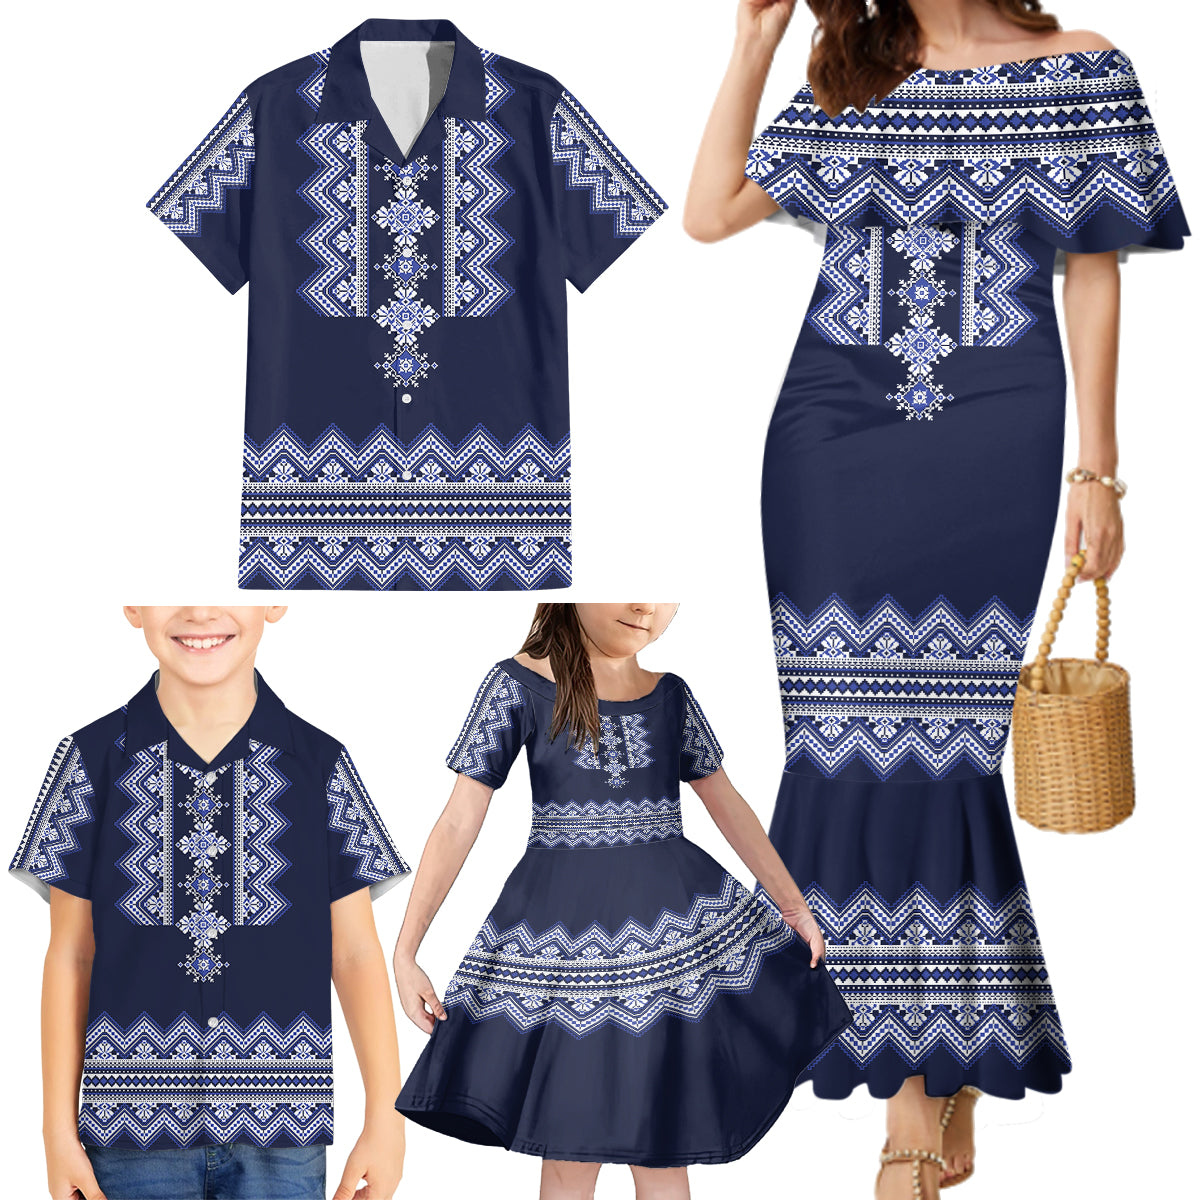 ukraine-folk-pattern-family-matching-mermaid-dress-and-hawaiian-shirt-ukrainian-navy-blue-version